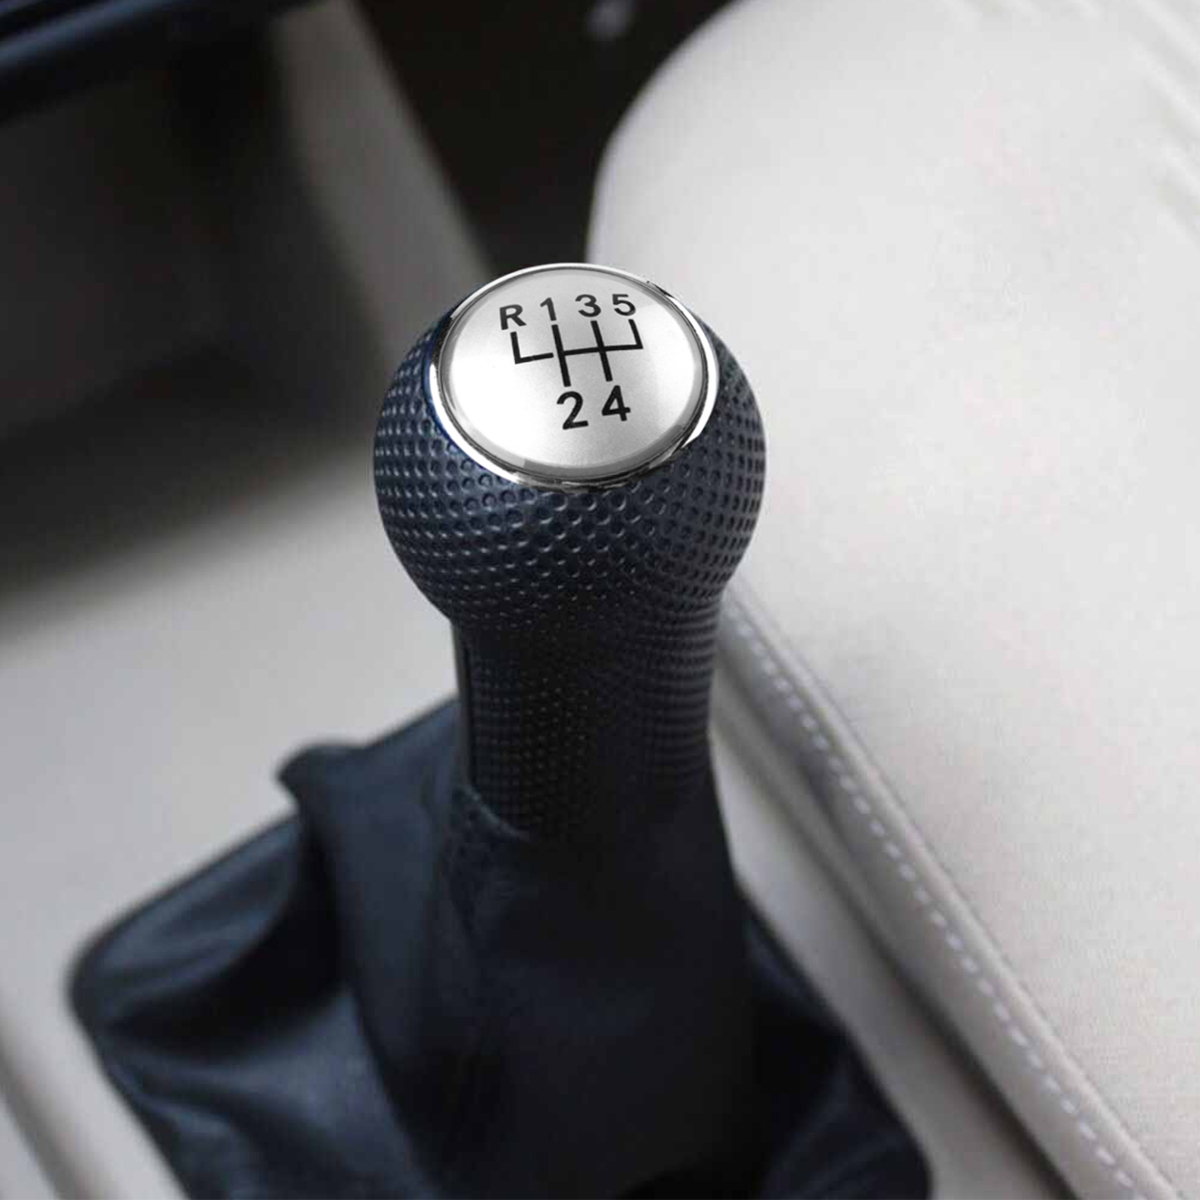 5 Speed Gear Shift Knob with Gaiter Boot Cover for VW Bora Golf MK4 GTI Jetta